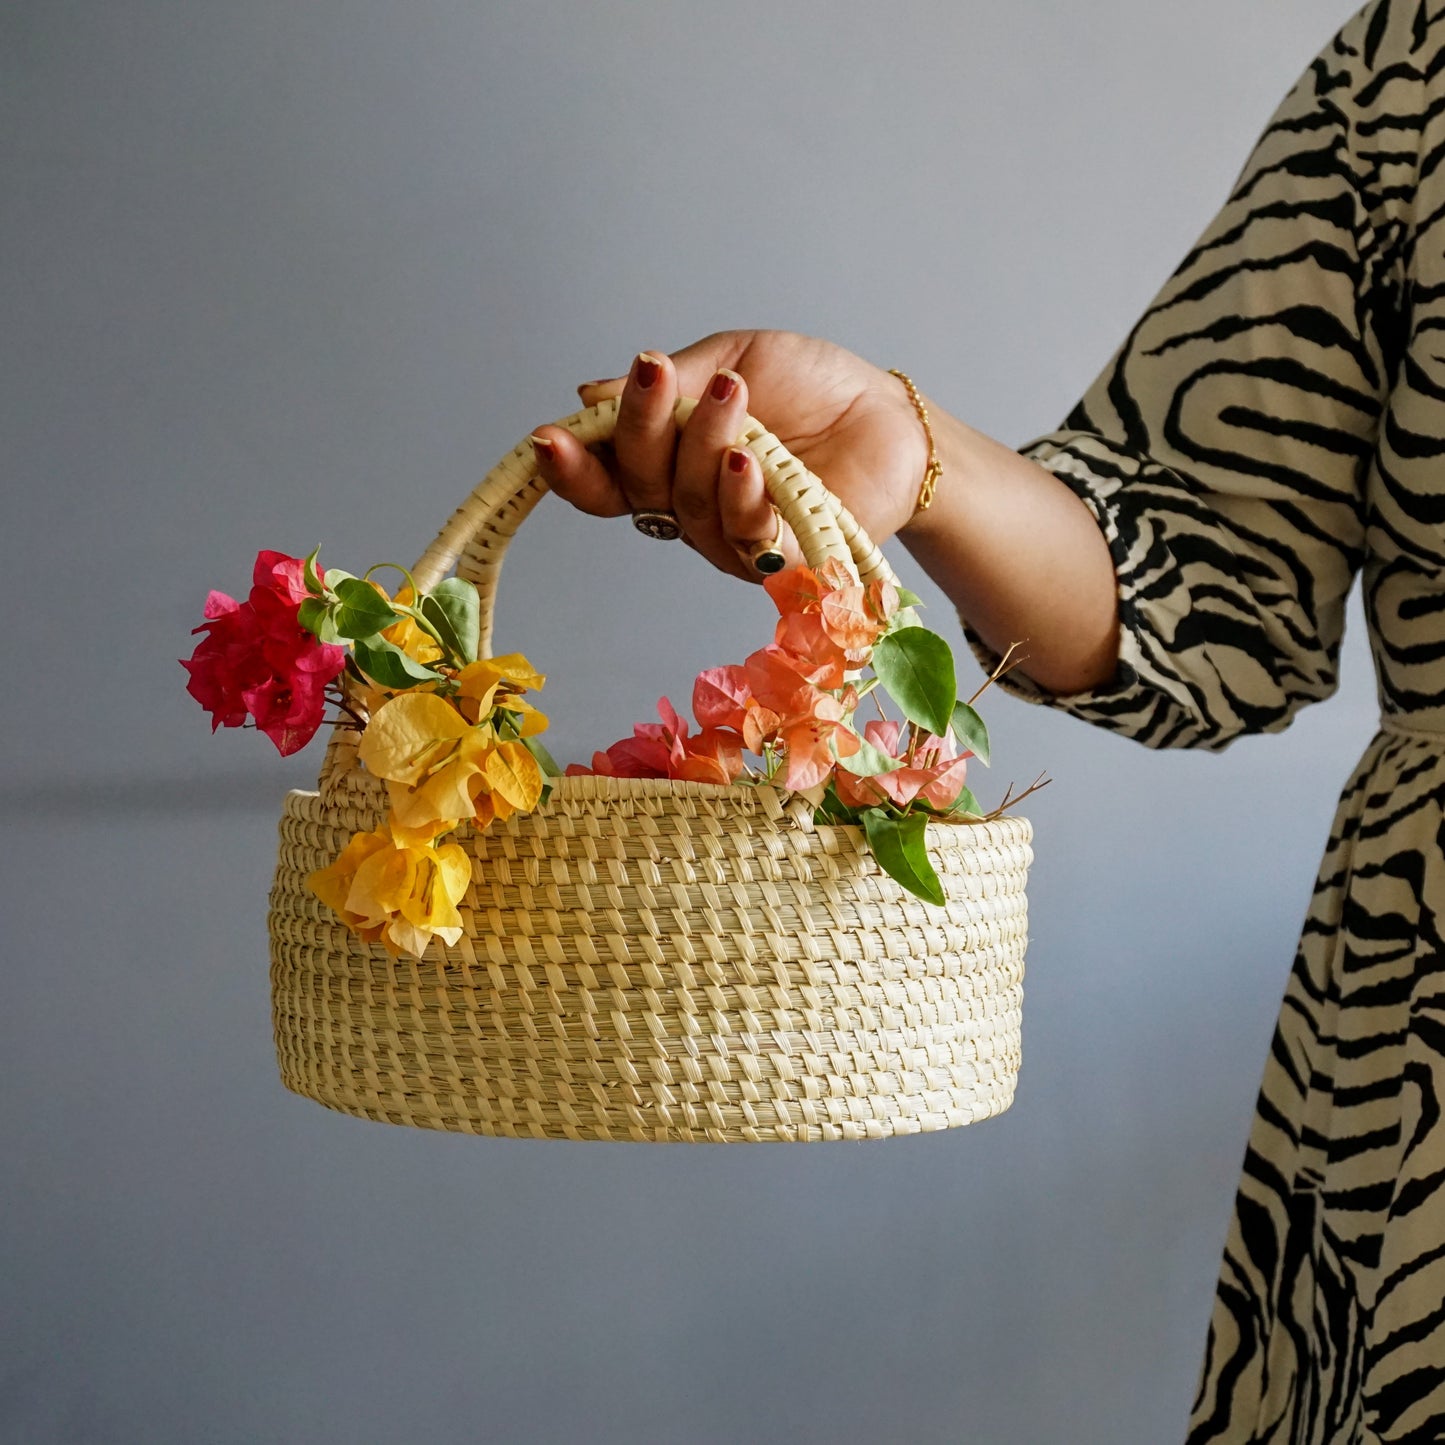 Moonj Flowers And Fruits Basket